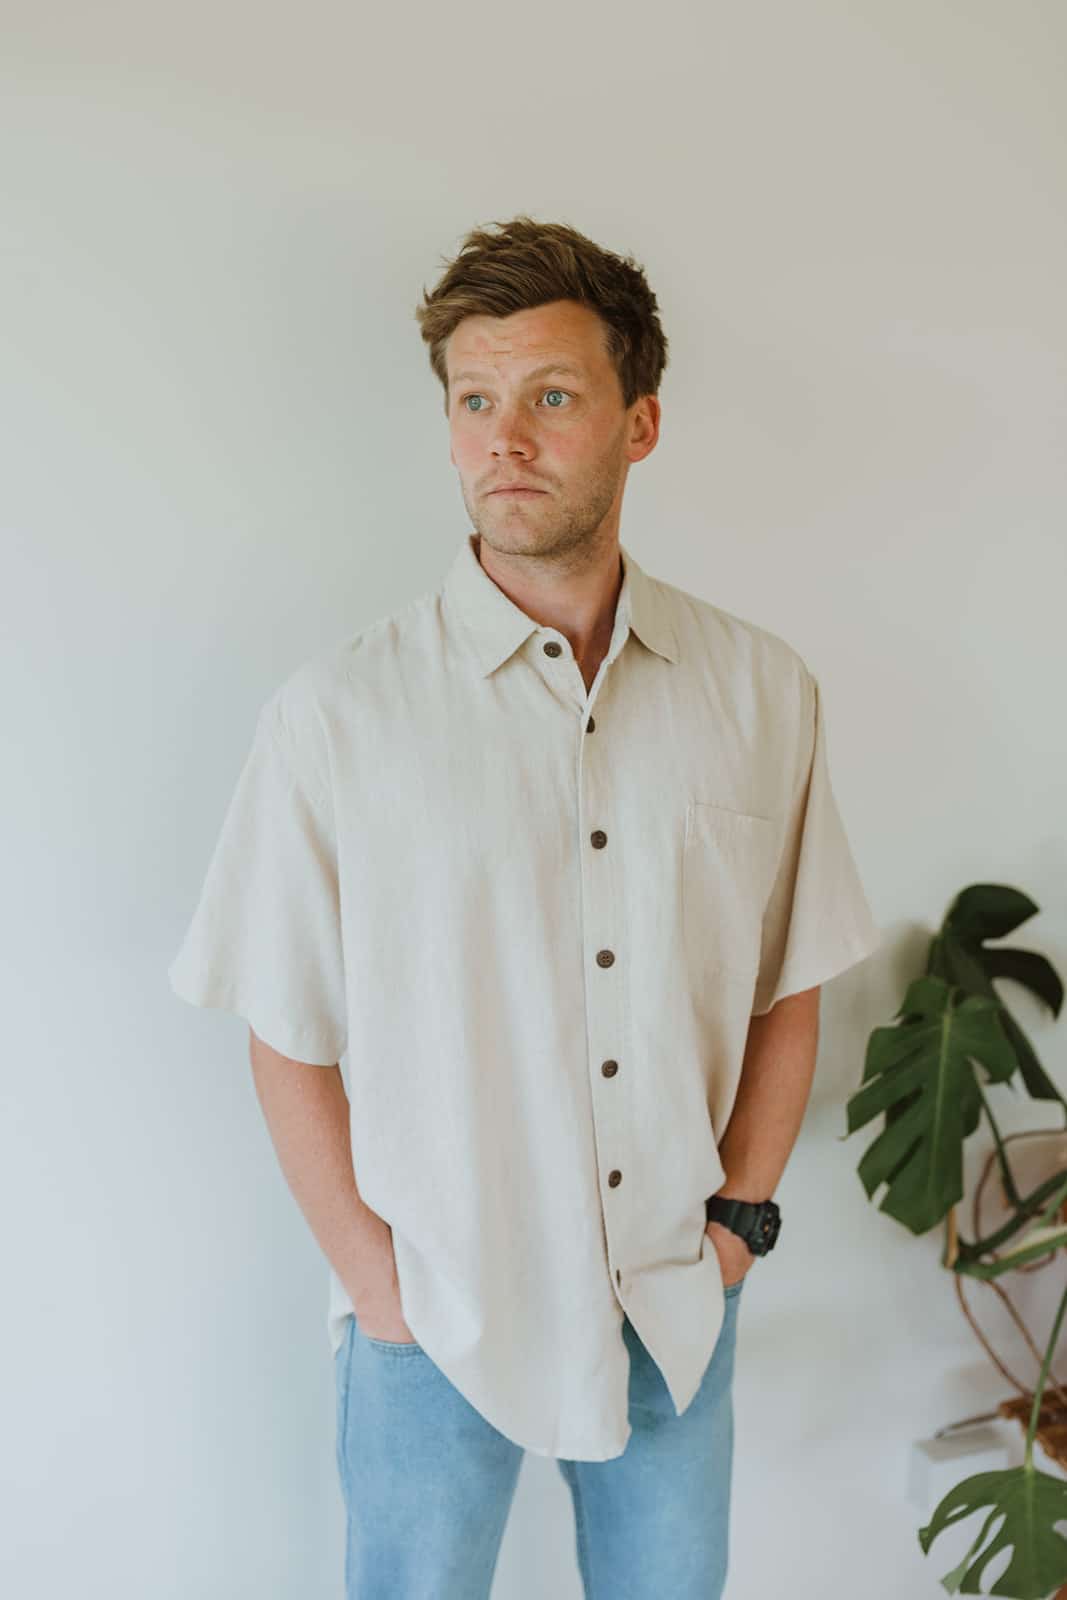 Men's Short Sleeve Hemp Rayon Shirt - Margaret River Hemp Co